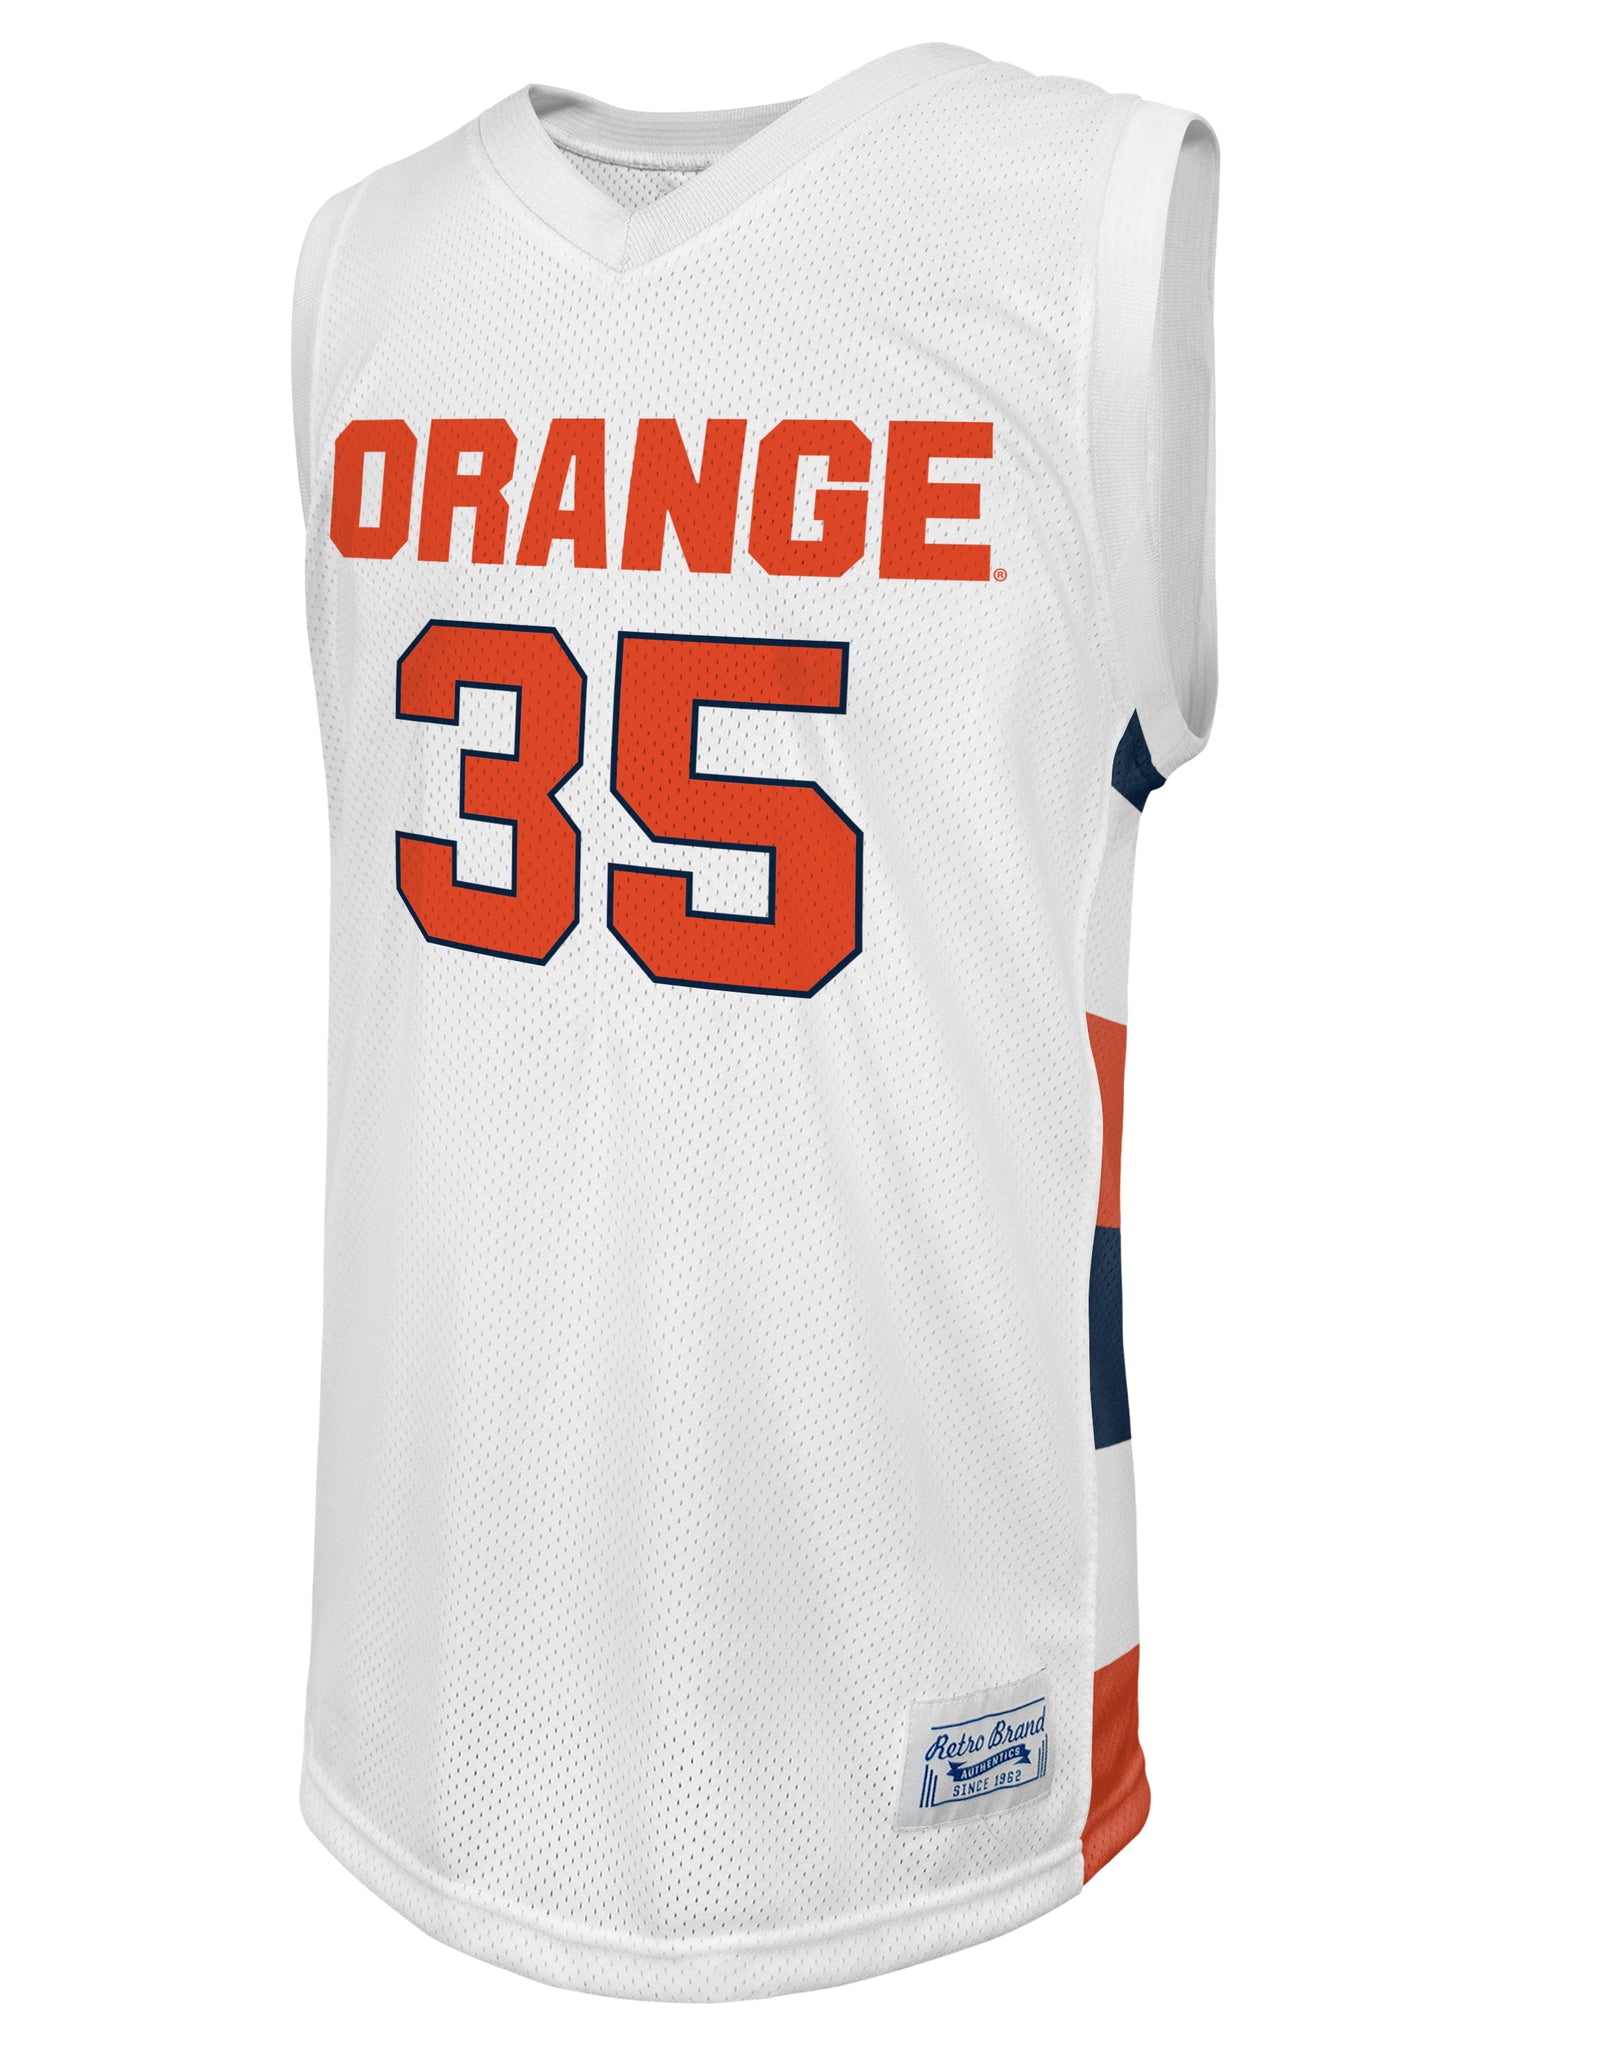 Orange Men's Basketball Jersey – The Syracuse NIL Store, 54% OFF